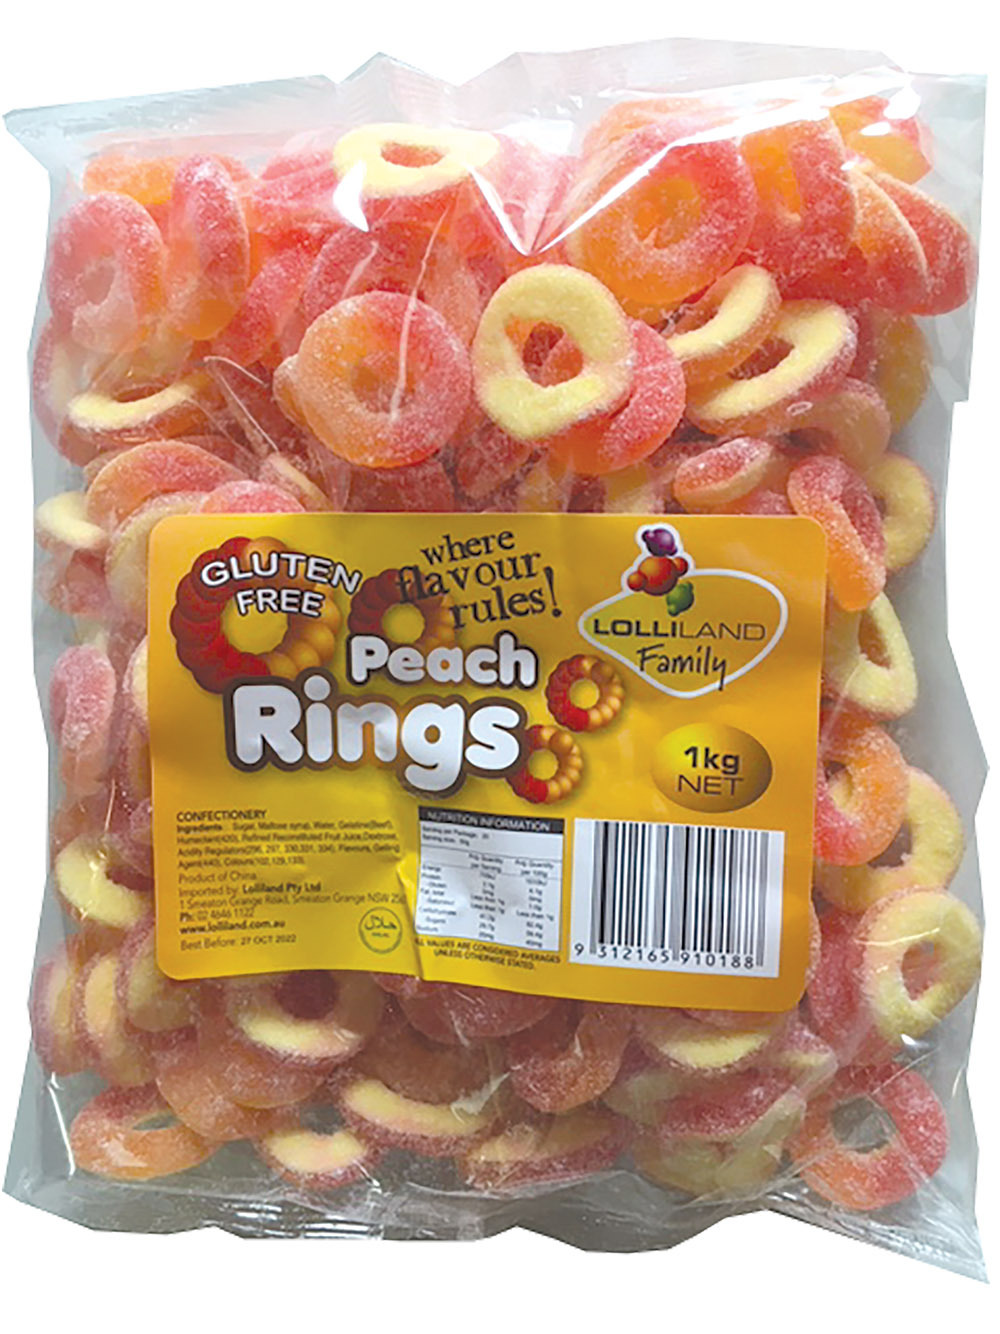 Peach ring rice crispy treats - One Sweet Mama